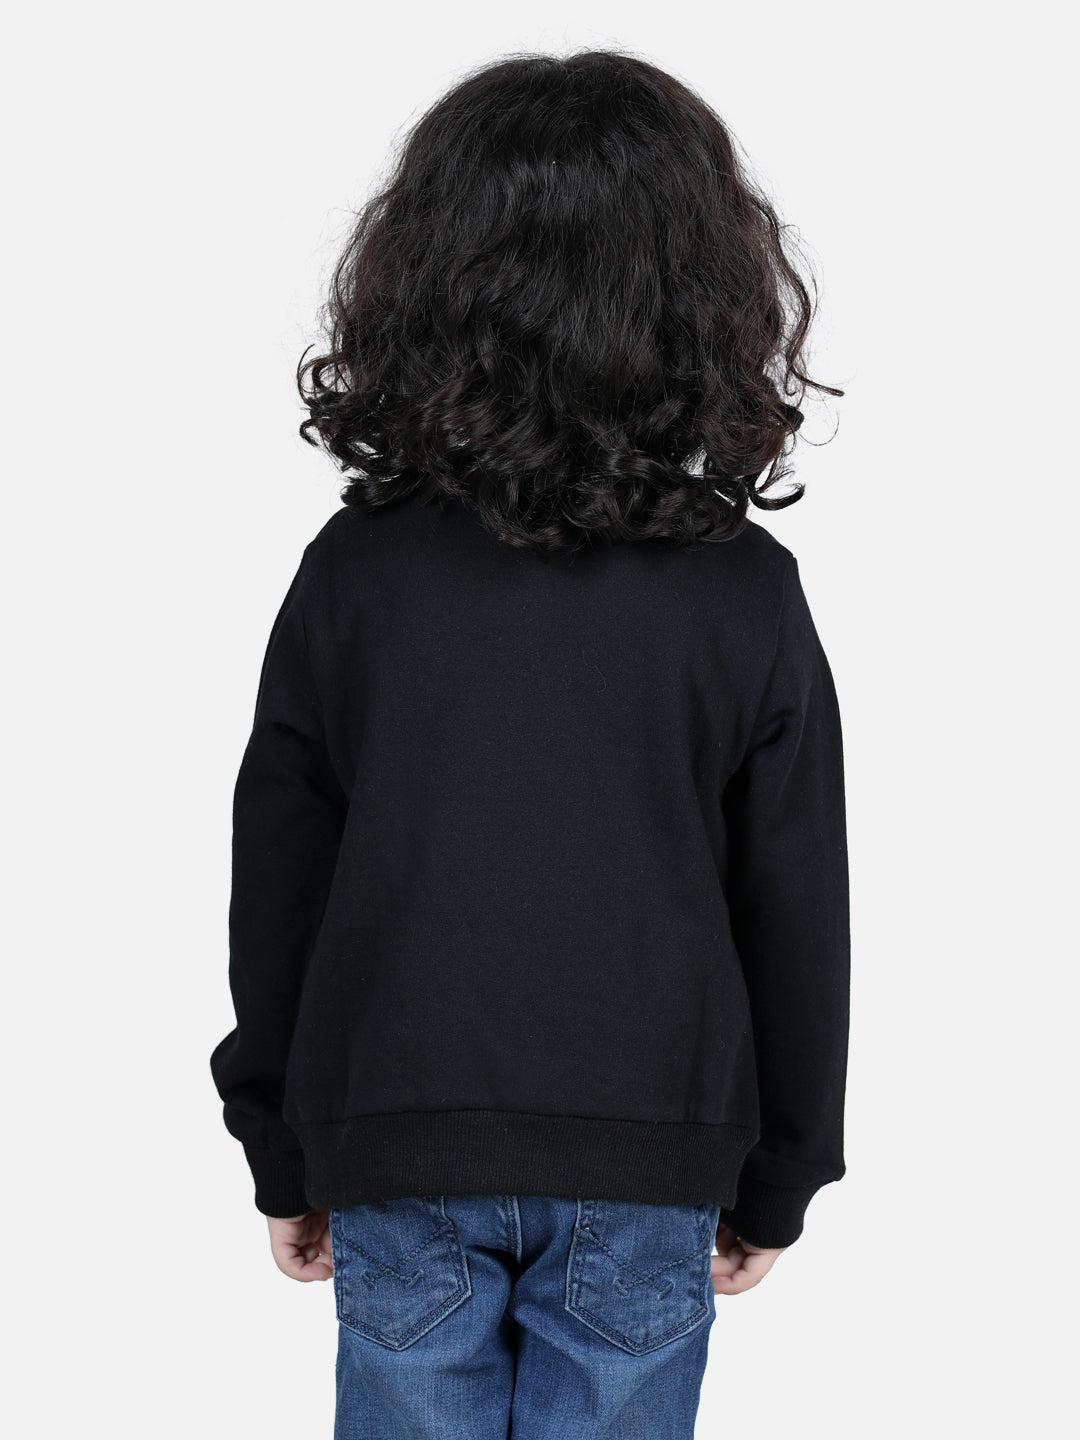 BownBee Full Sleeve Sweatshirt for Boys- Black